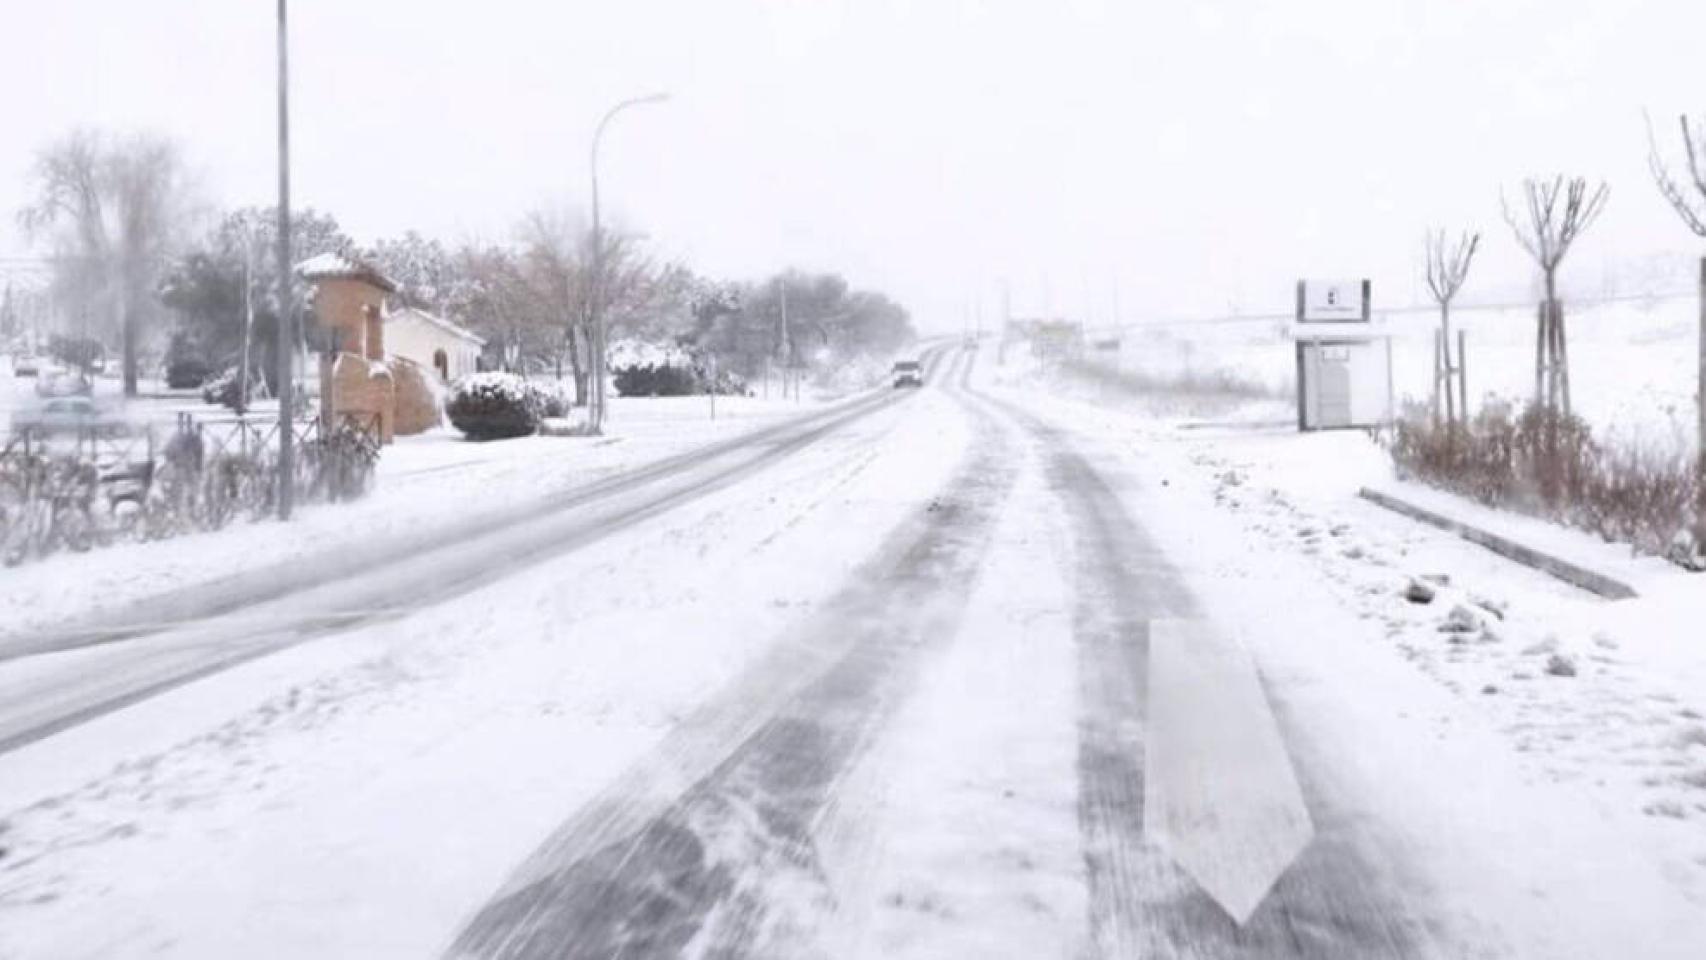 Imagen de la nevada este fin de semana en una carretera de Castilla-La Mancha